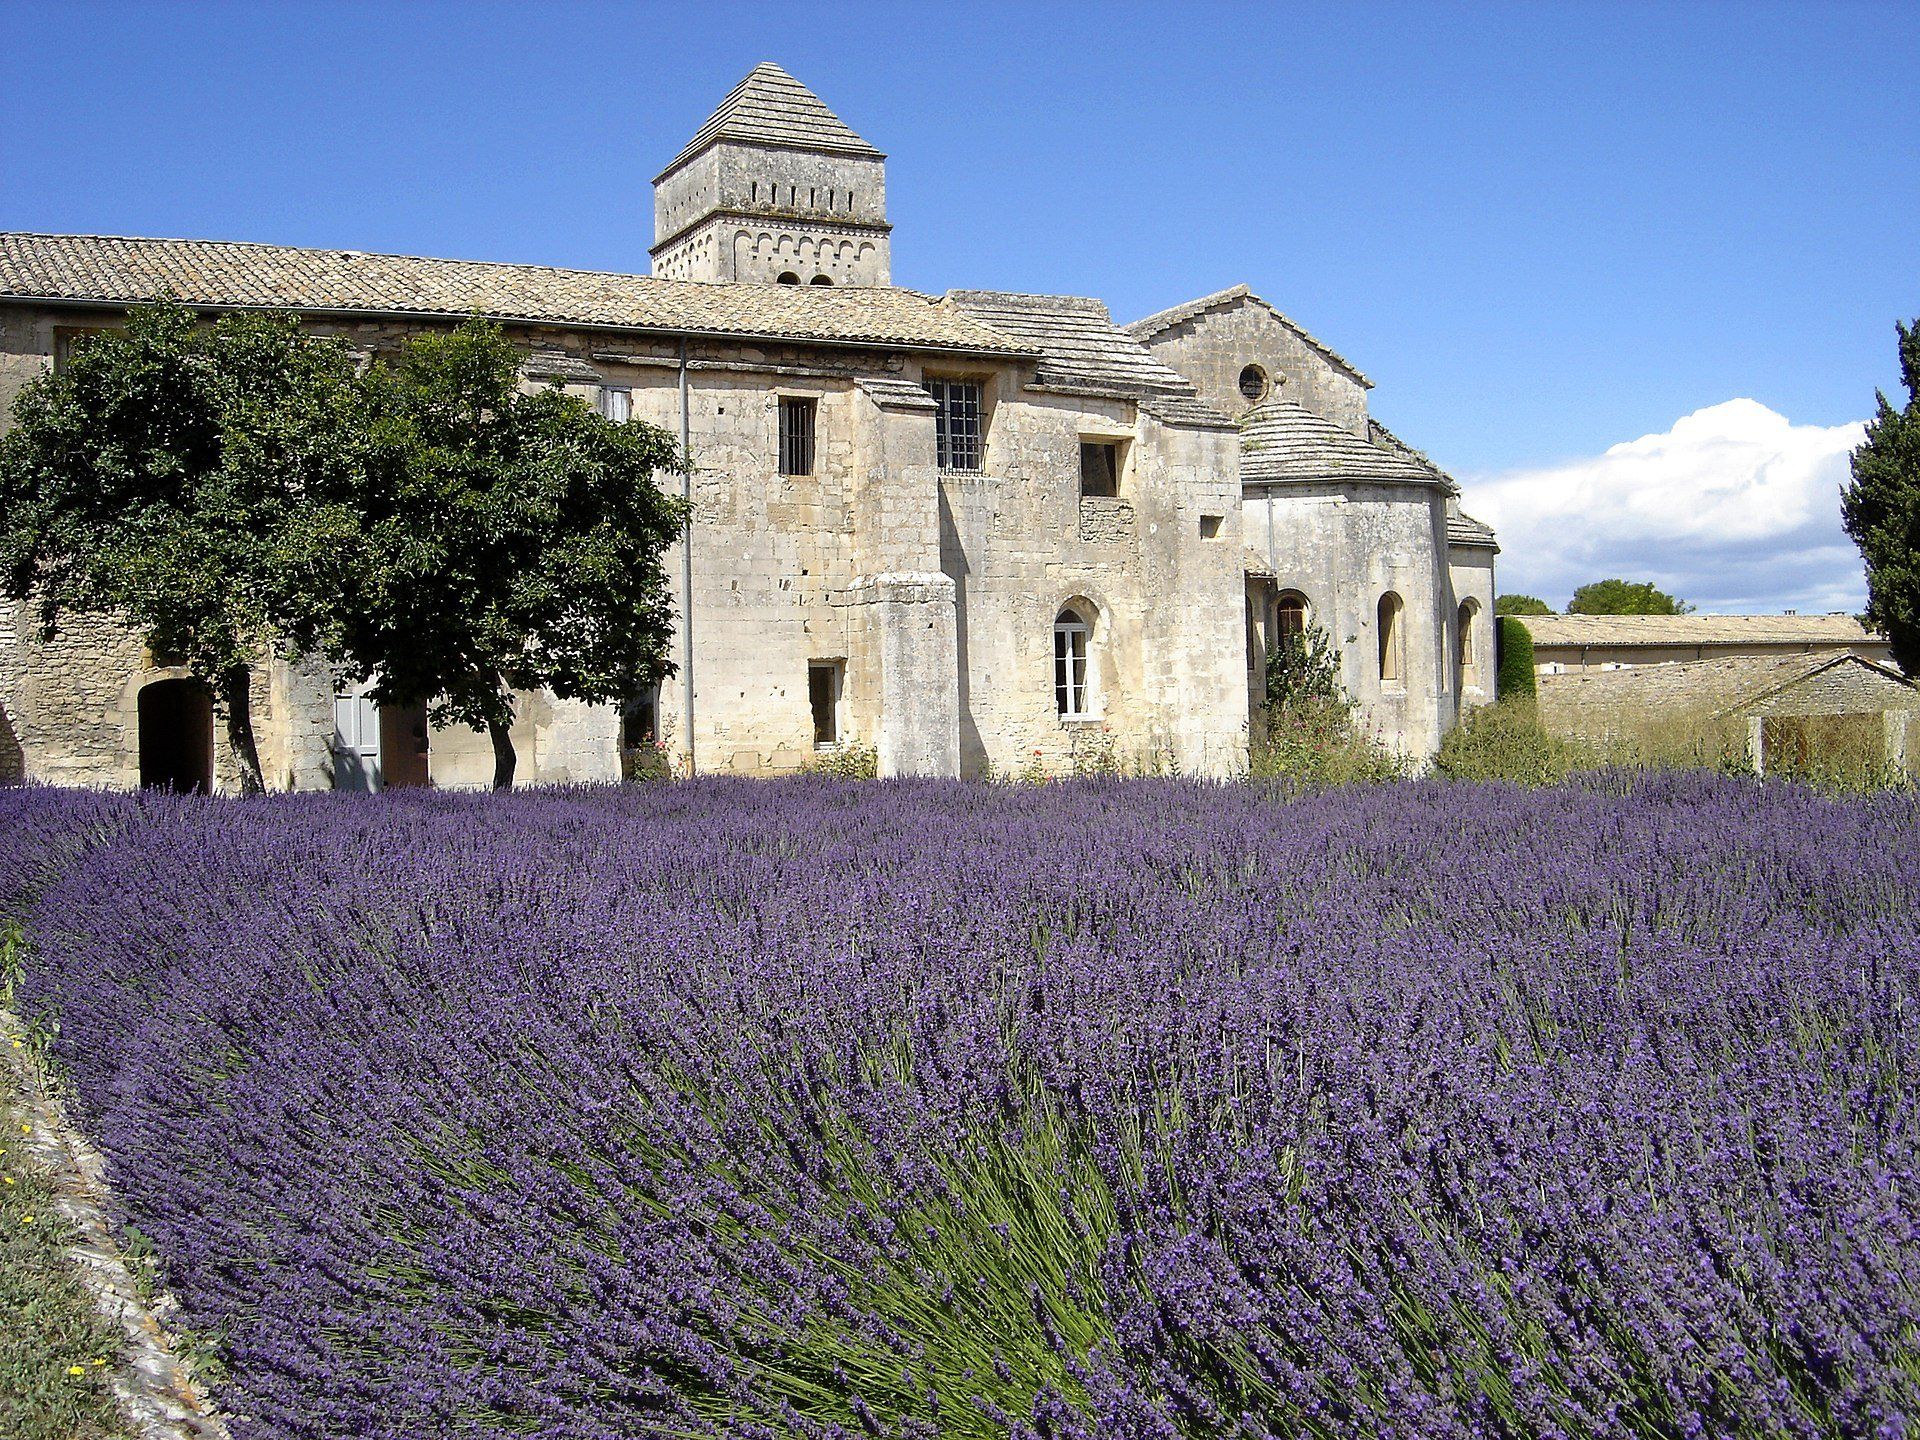 The Monastery of Saint-Paul de Mausole at Saint-Rémy-de-Provence, Bouches-du-Rhône, France. Photo: EmDee